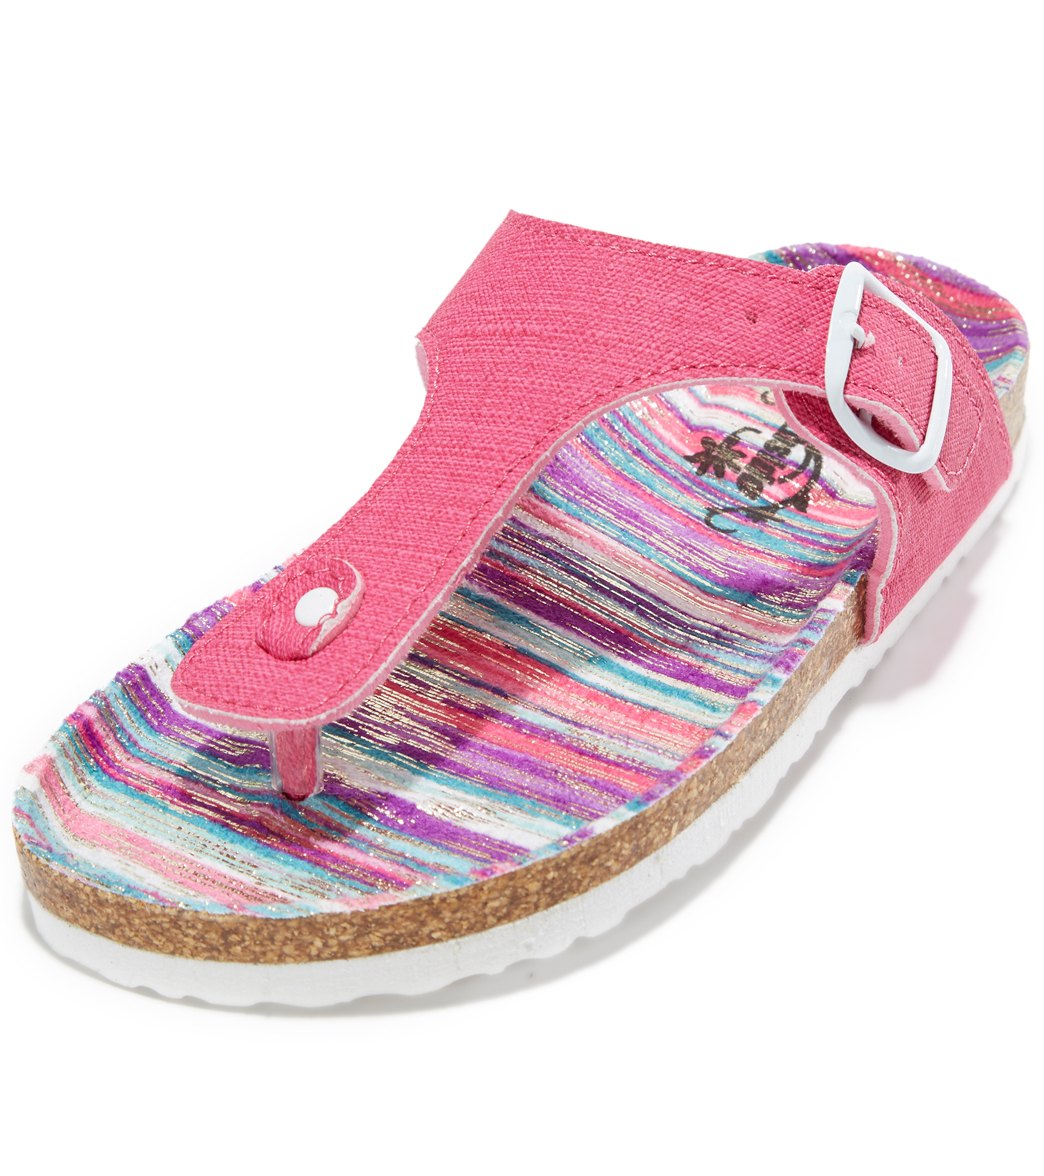 Northside Girls' Bindi Cork Sandals - Bright Pink 2 - Swimoutlet.com